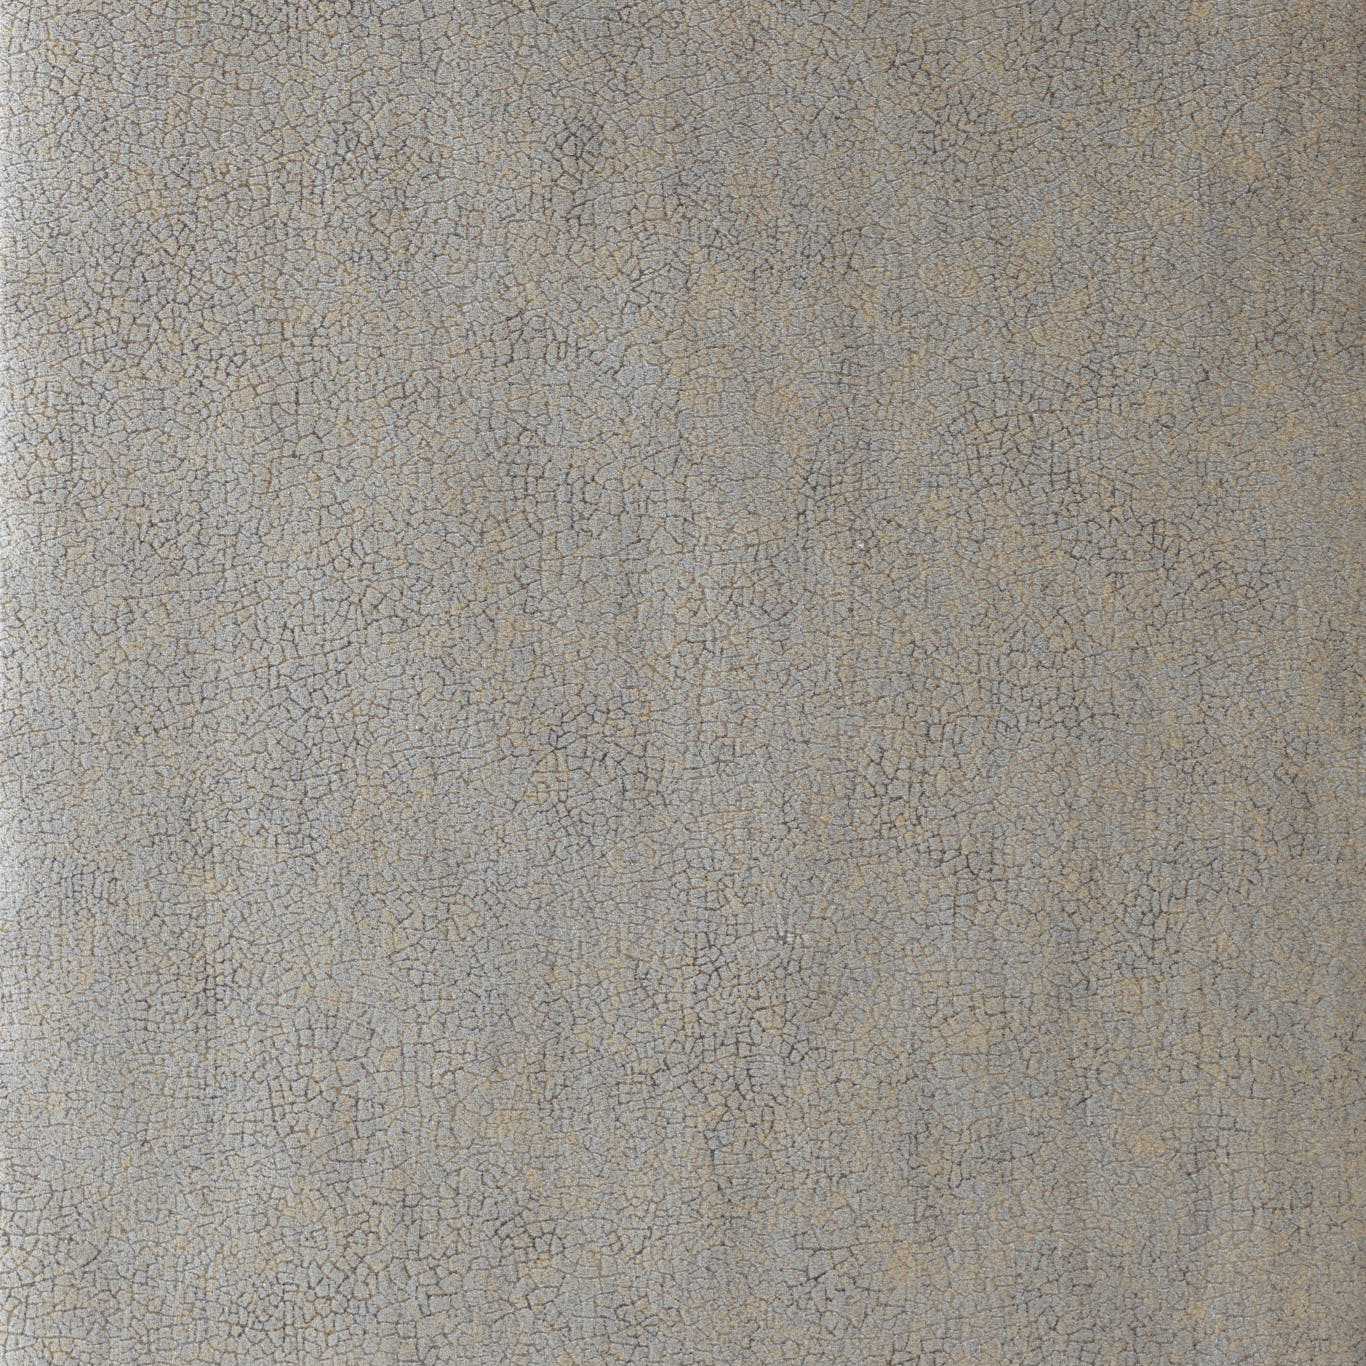 Igneous Platinum Wallpaper EANT111138 by Harlequin